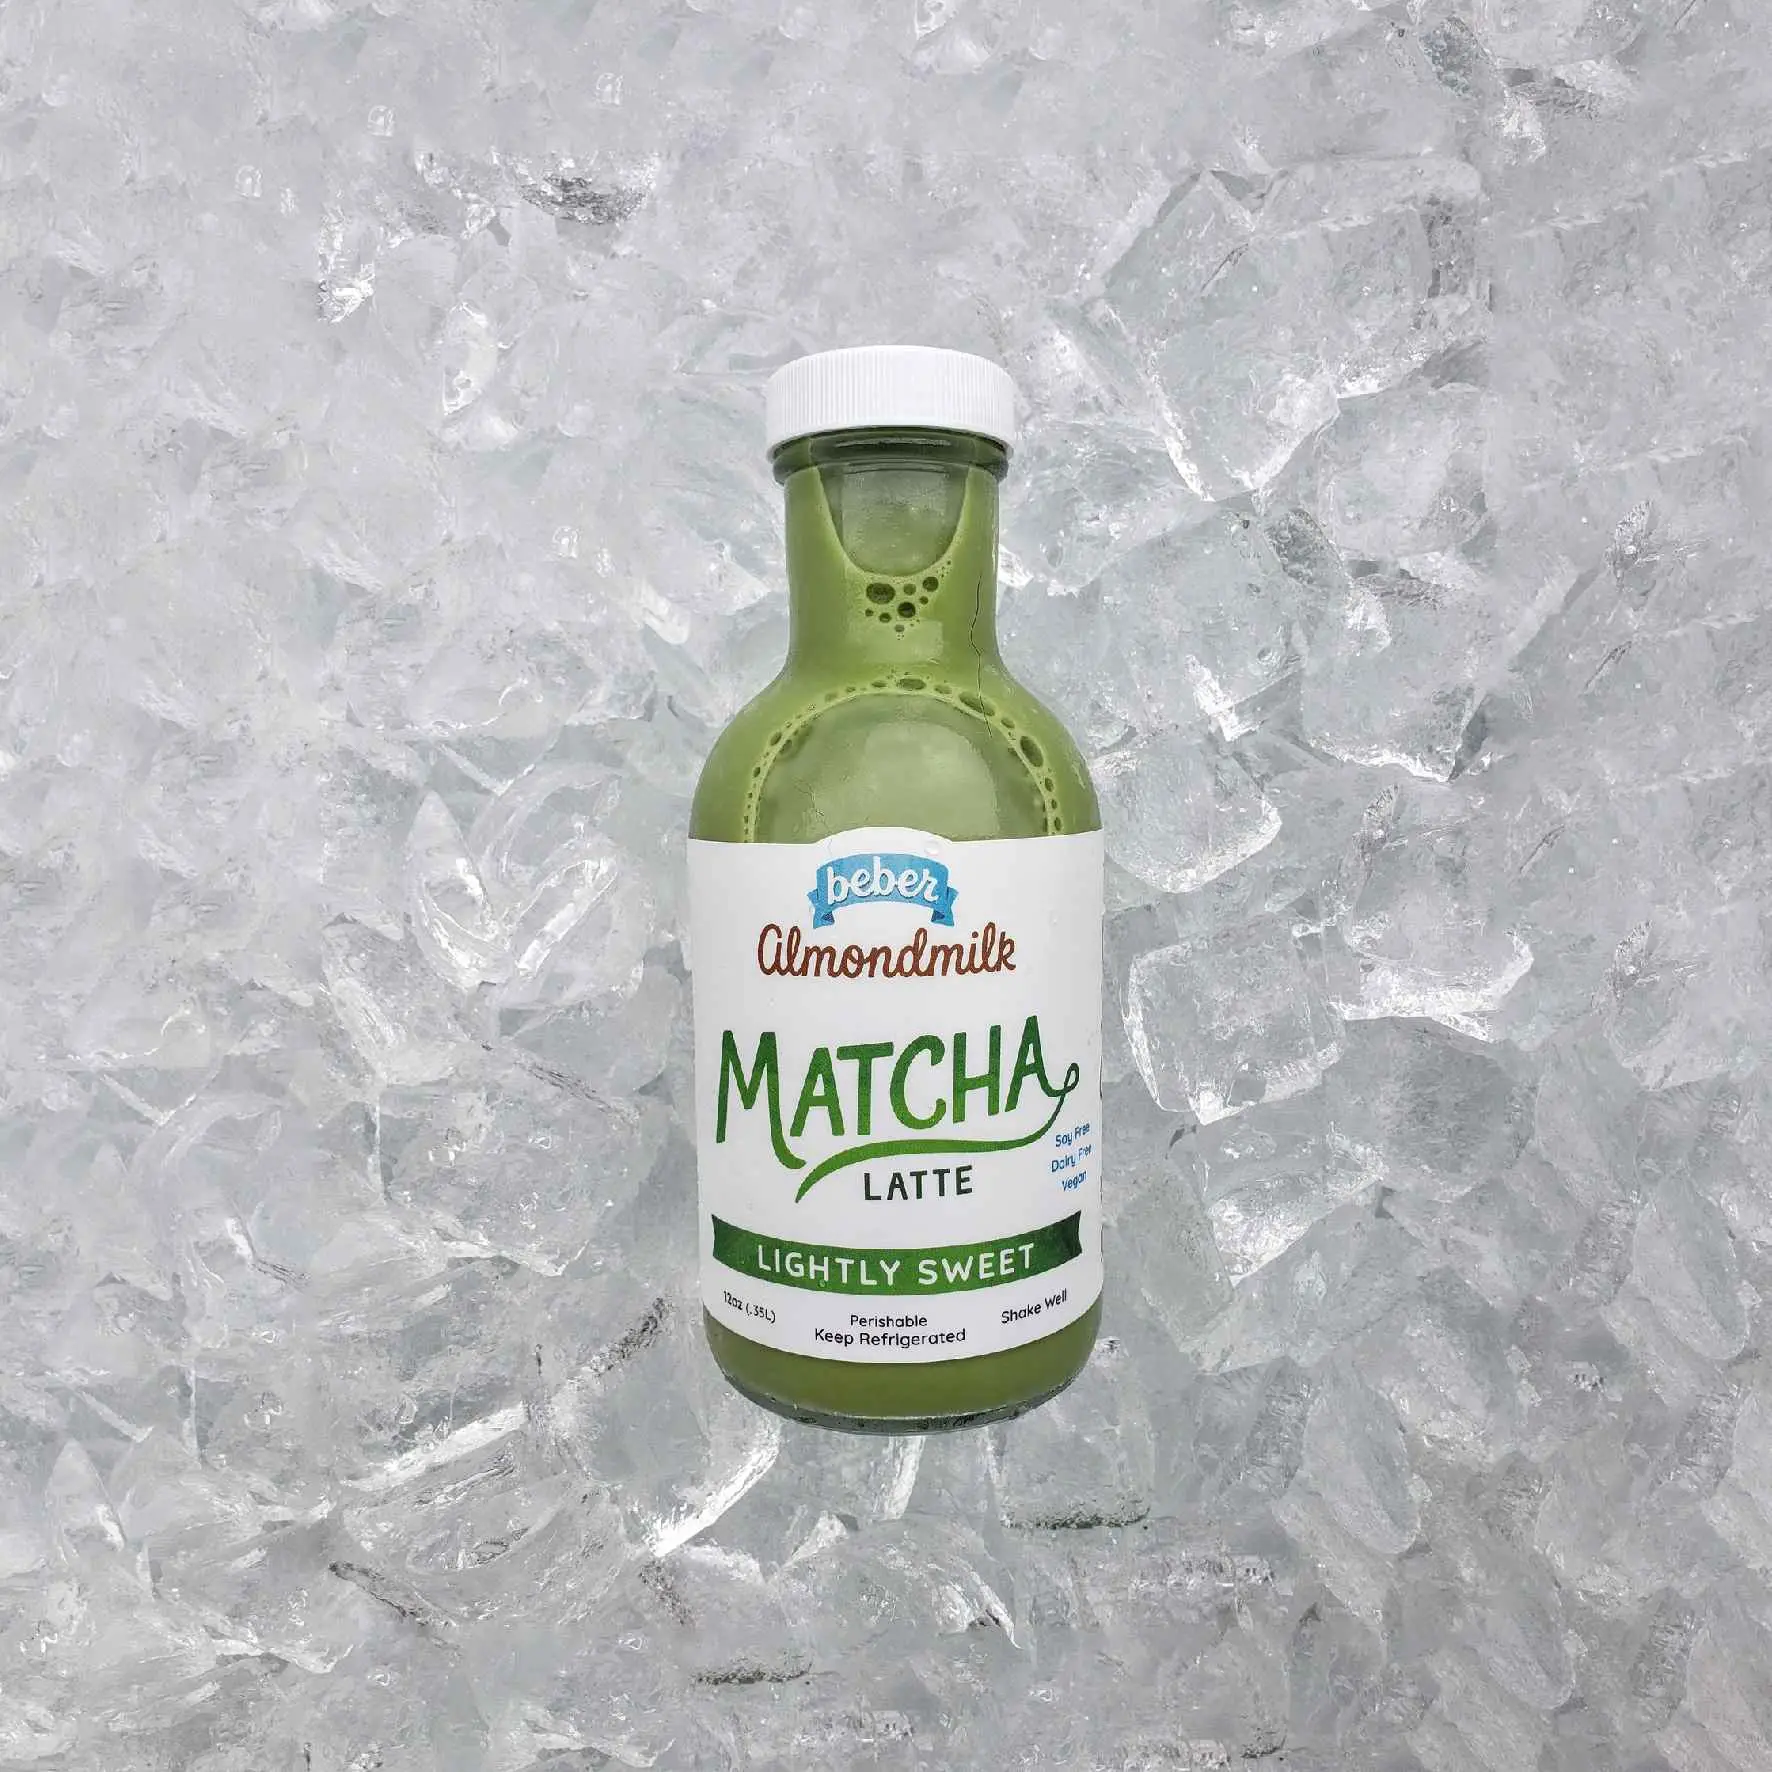 Matcha Latte Almondmilk Delivery